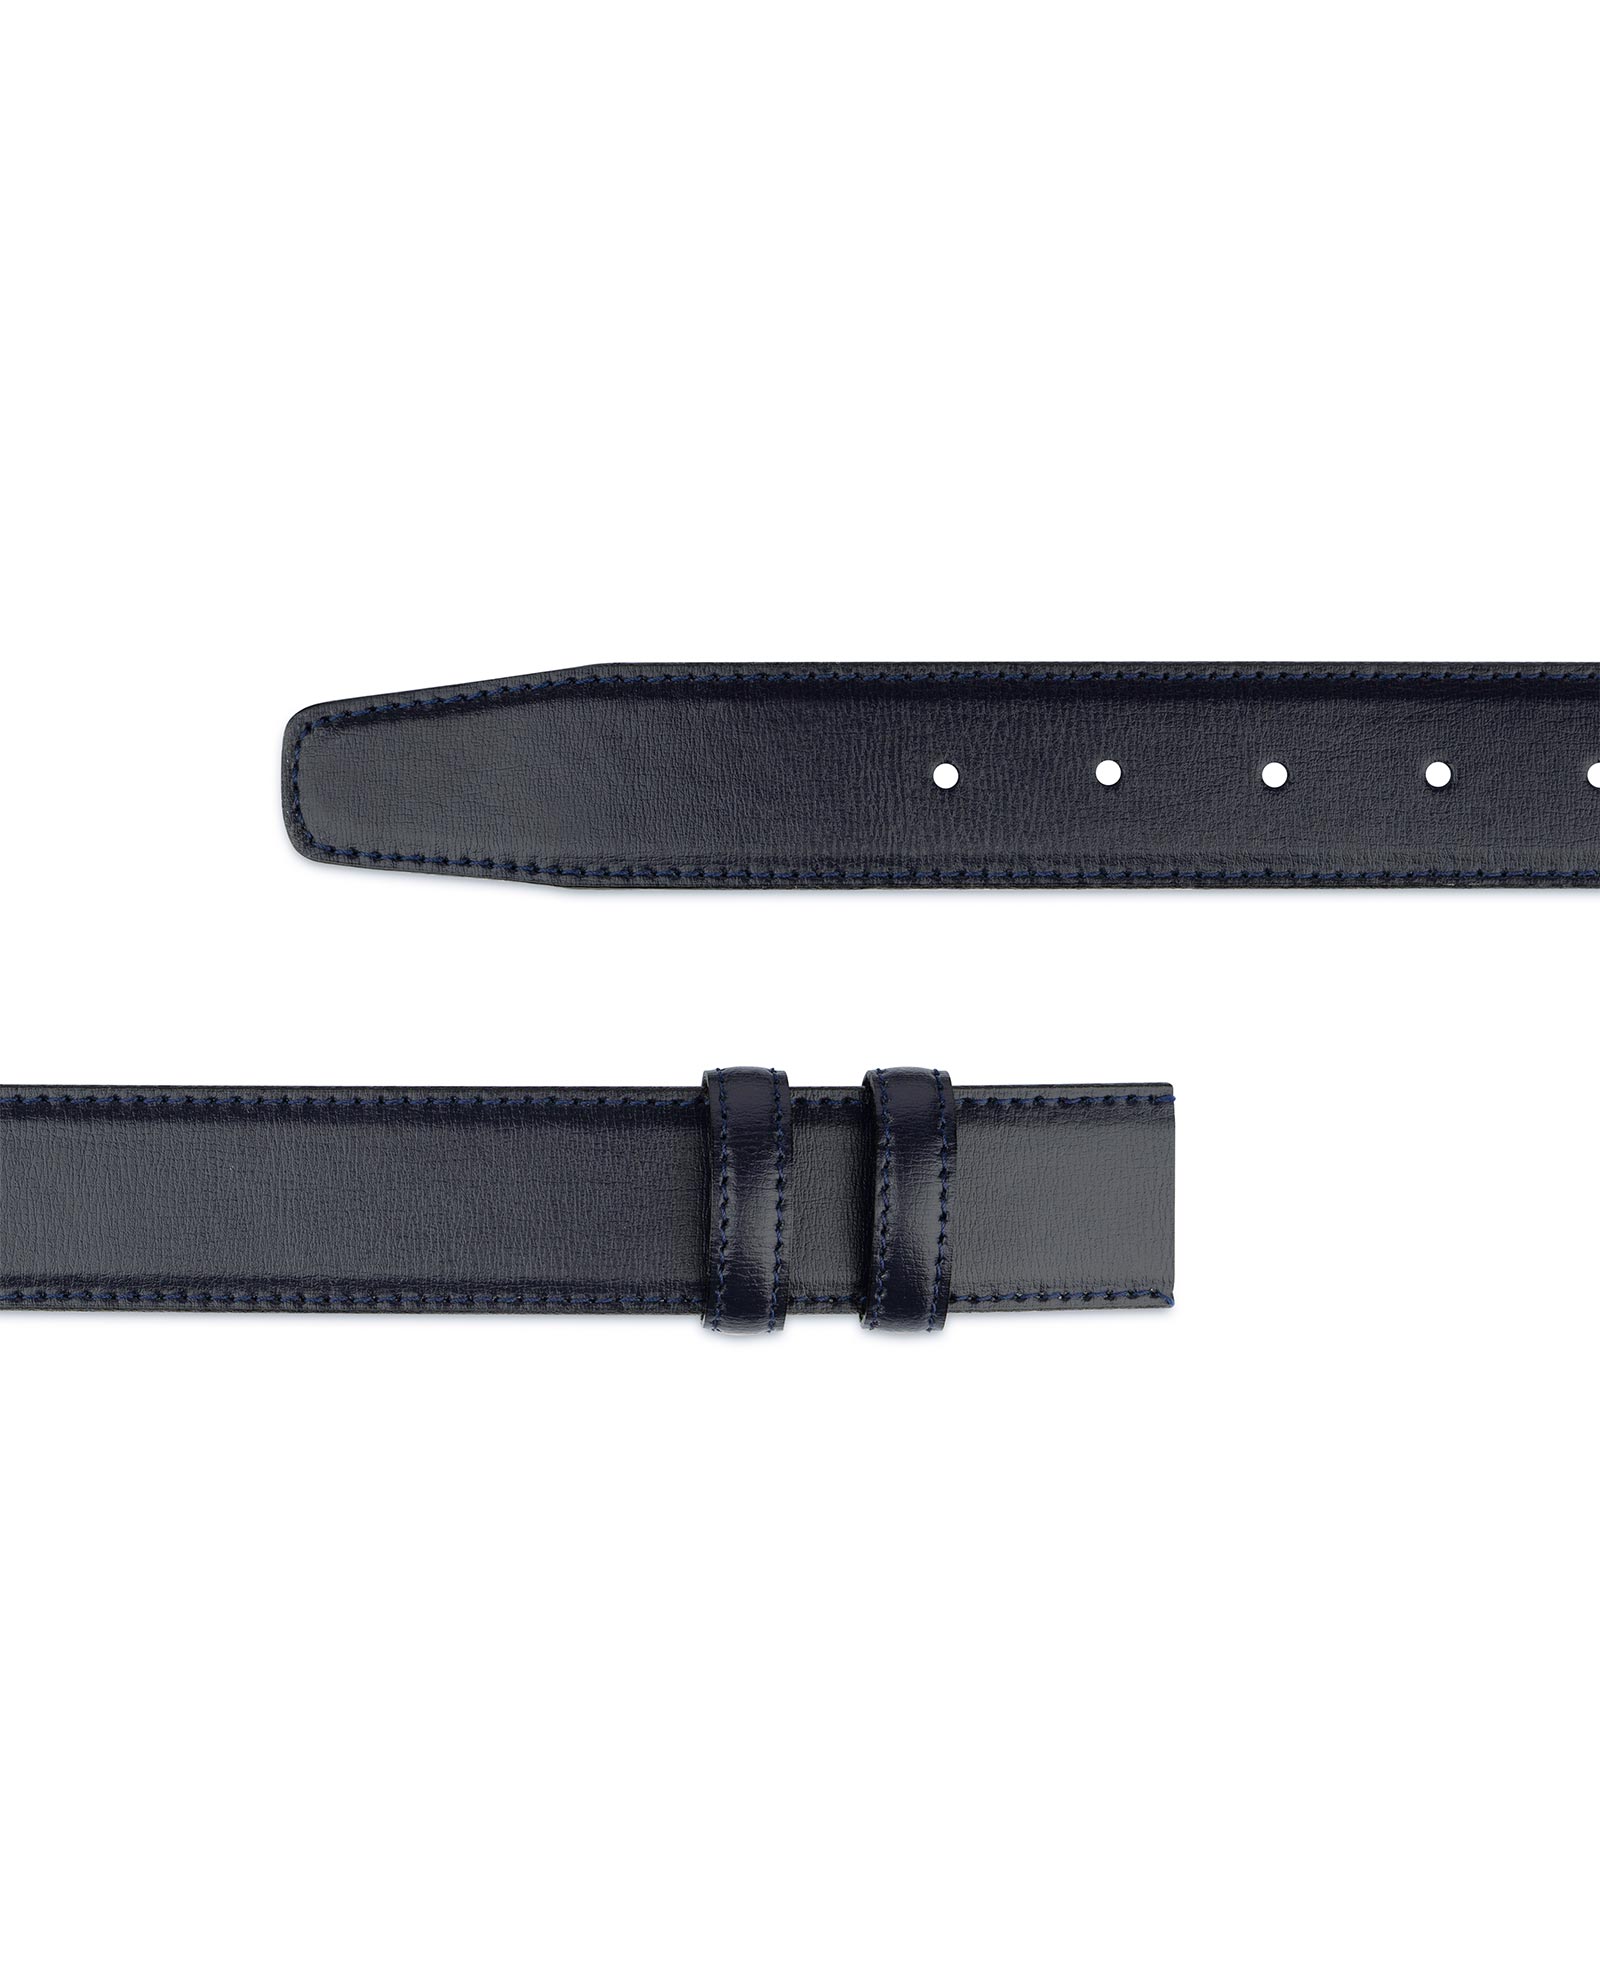 Blue leather belt with adjustable buckle